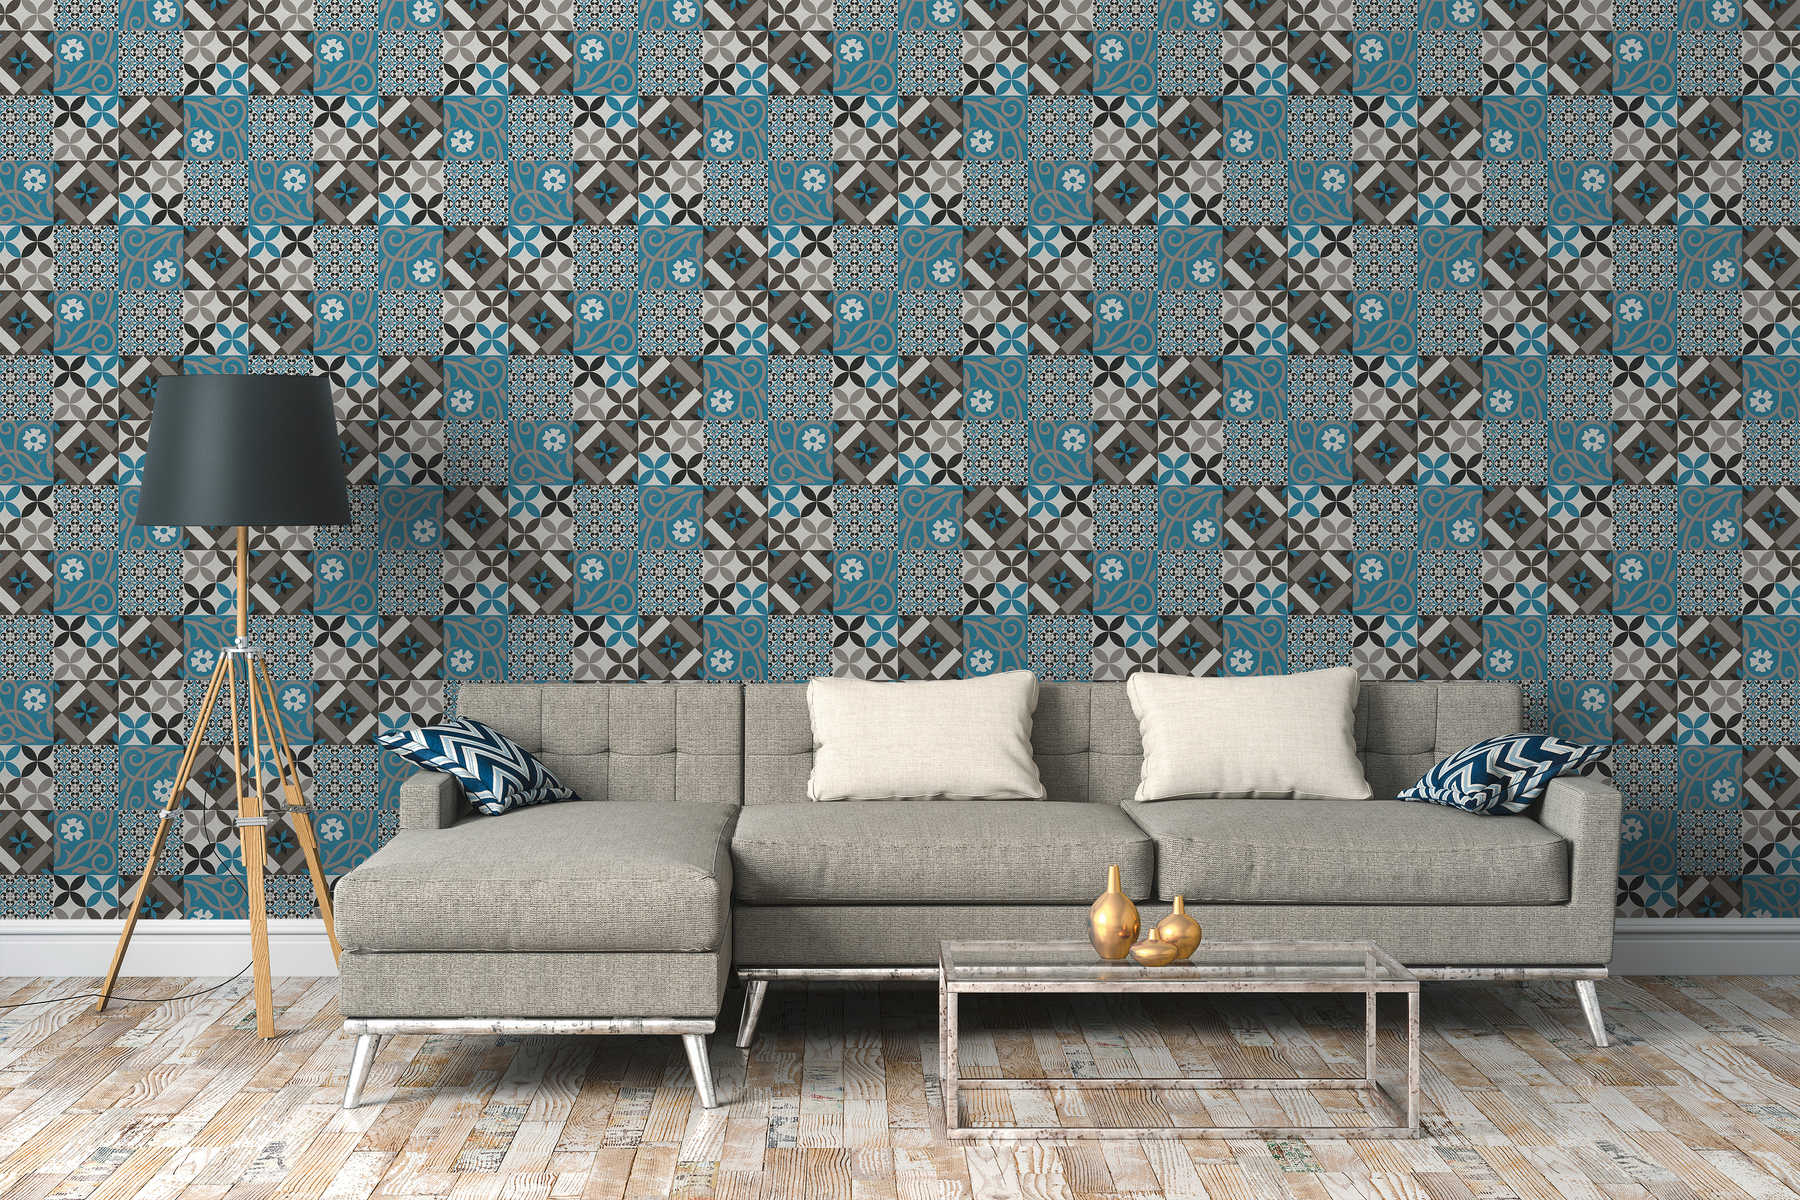             Non-woven wallpaper tiles pattern mix - black, blue, anthracite
        